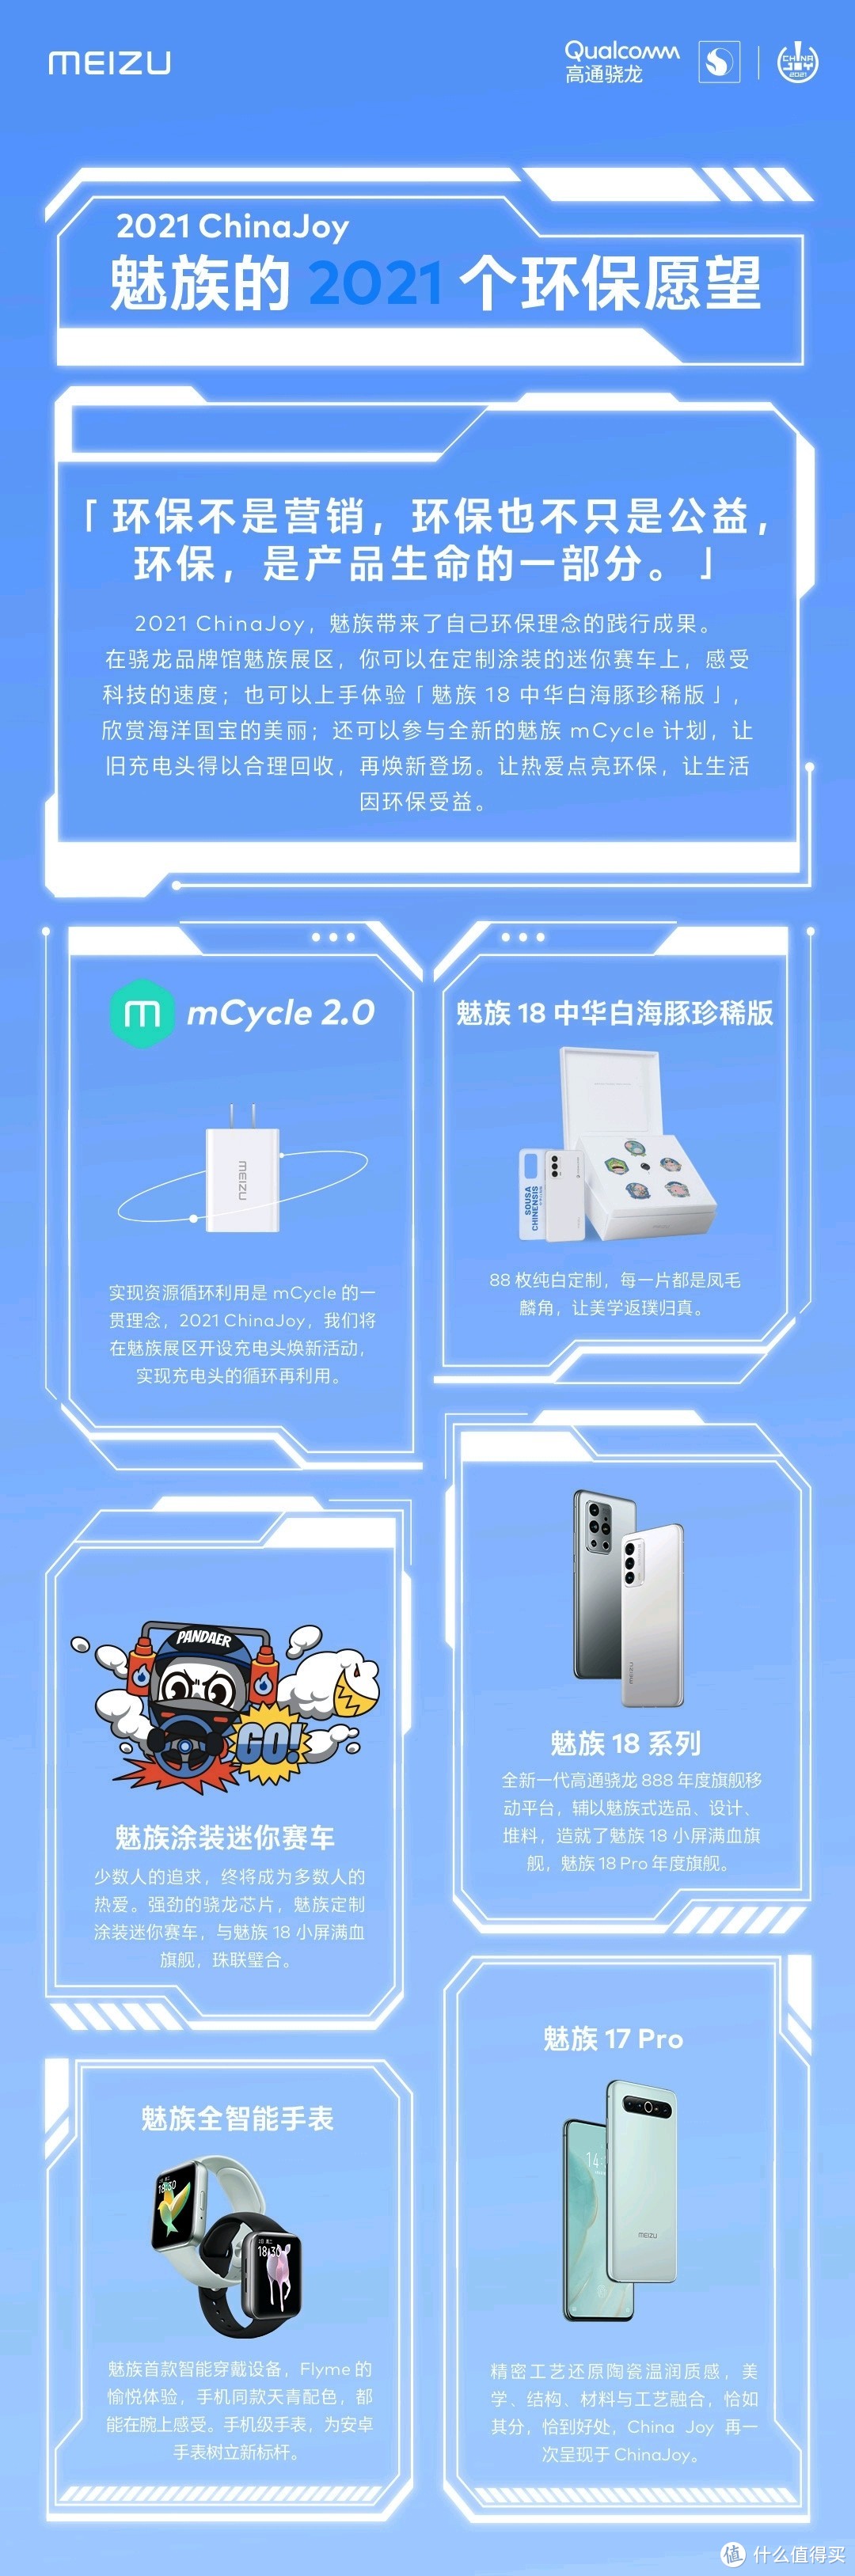 2021ChinaJoy 魅族 mCycle 线下特别企划